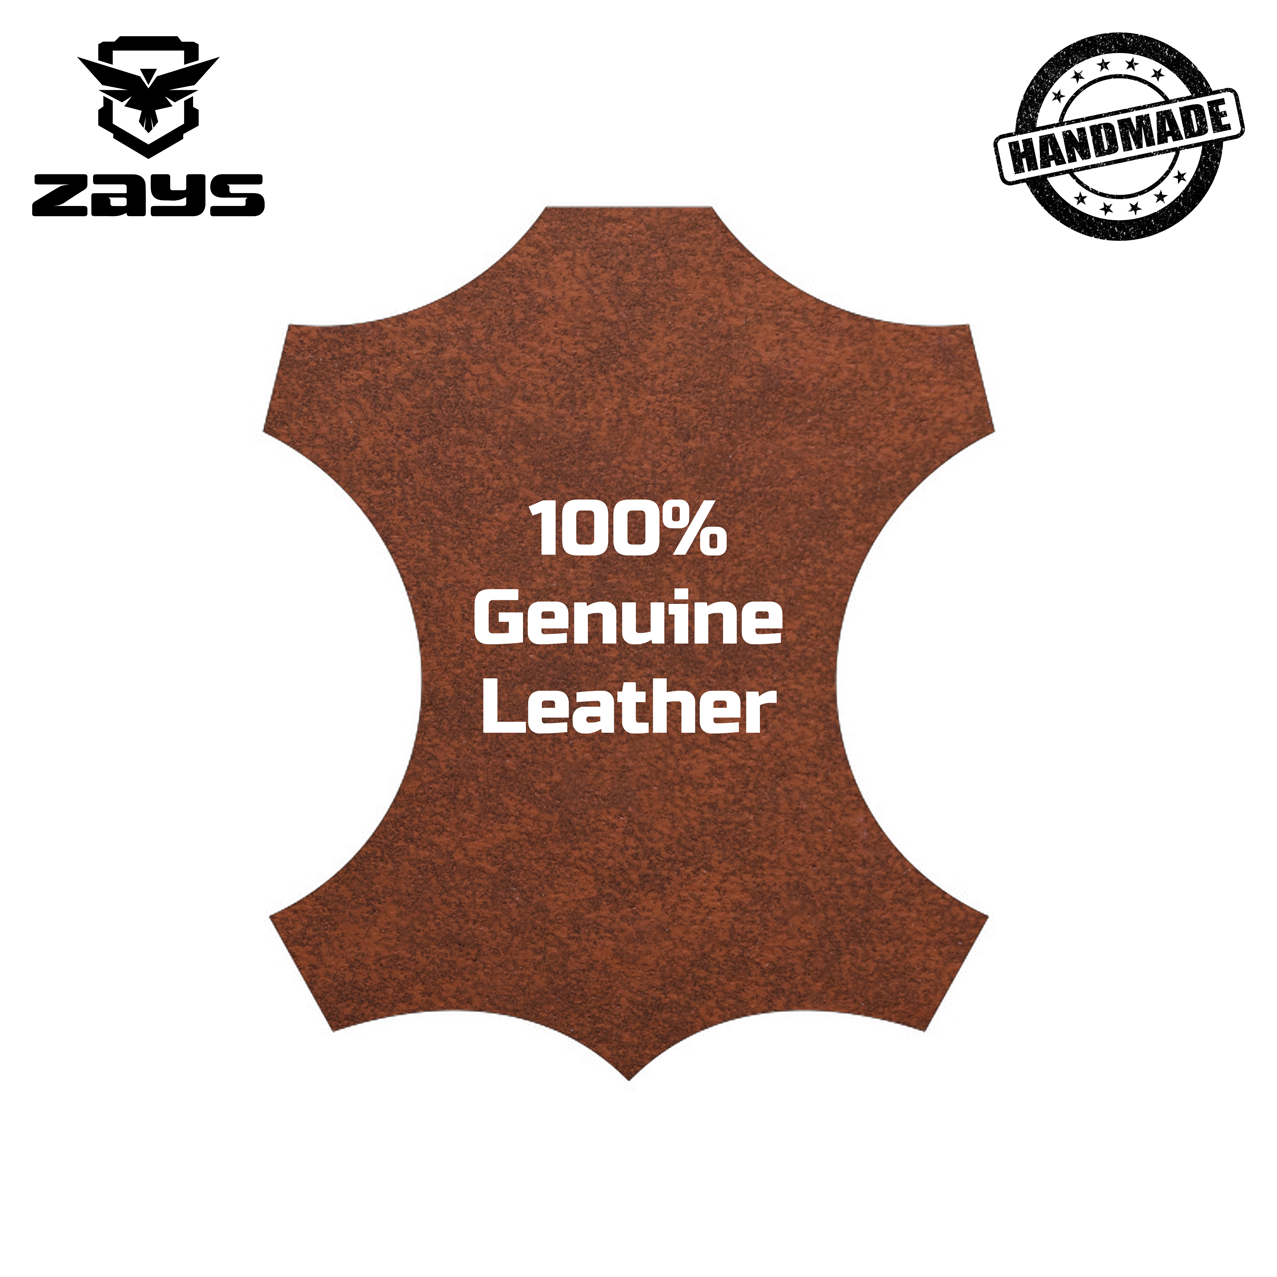 Zays Leather Sandal For Men (Chocolate) - ZA18